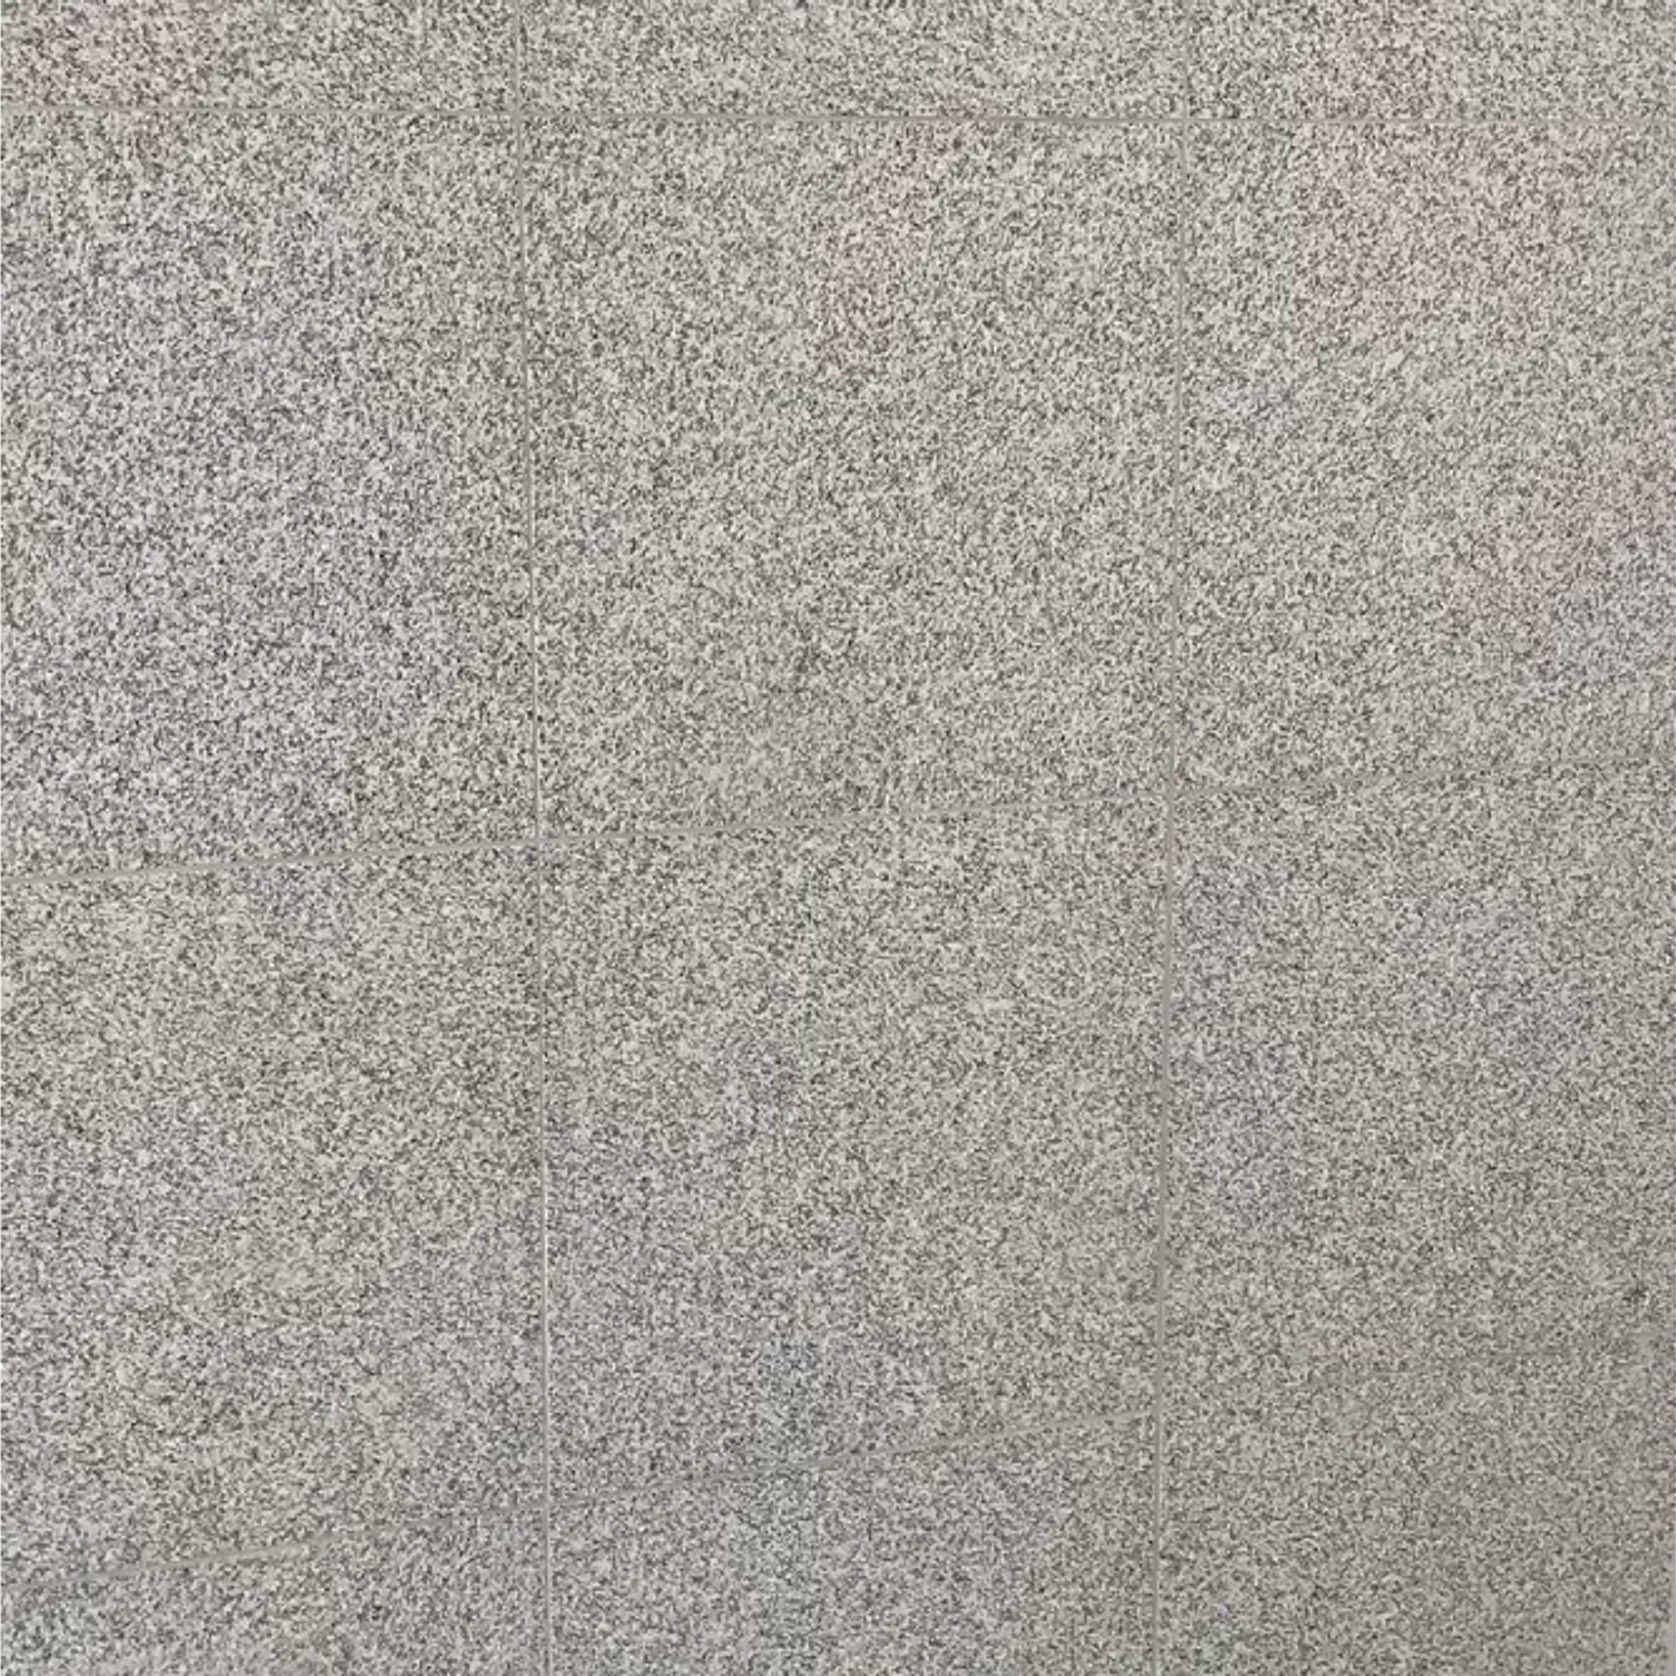 Porpoise Grey Granite gallery detail image